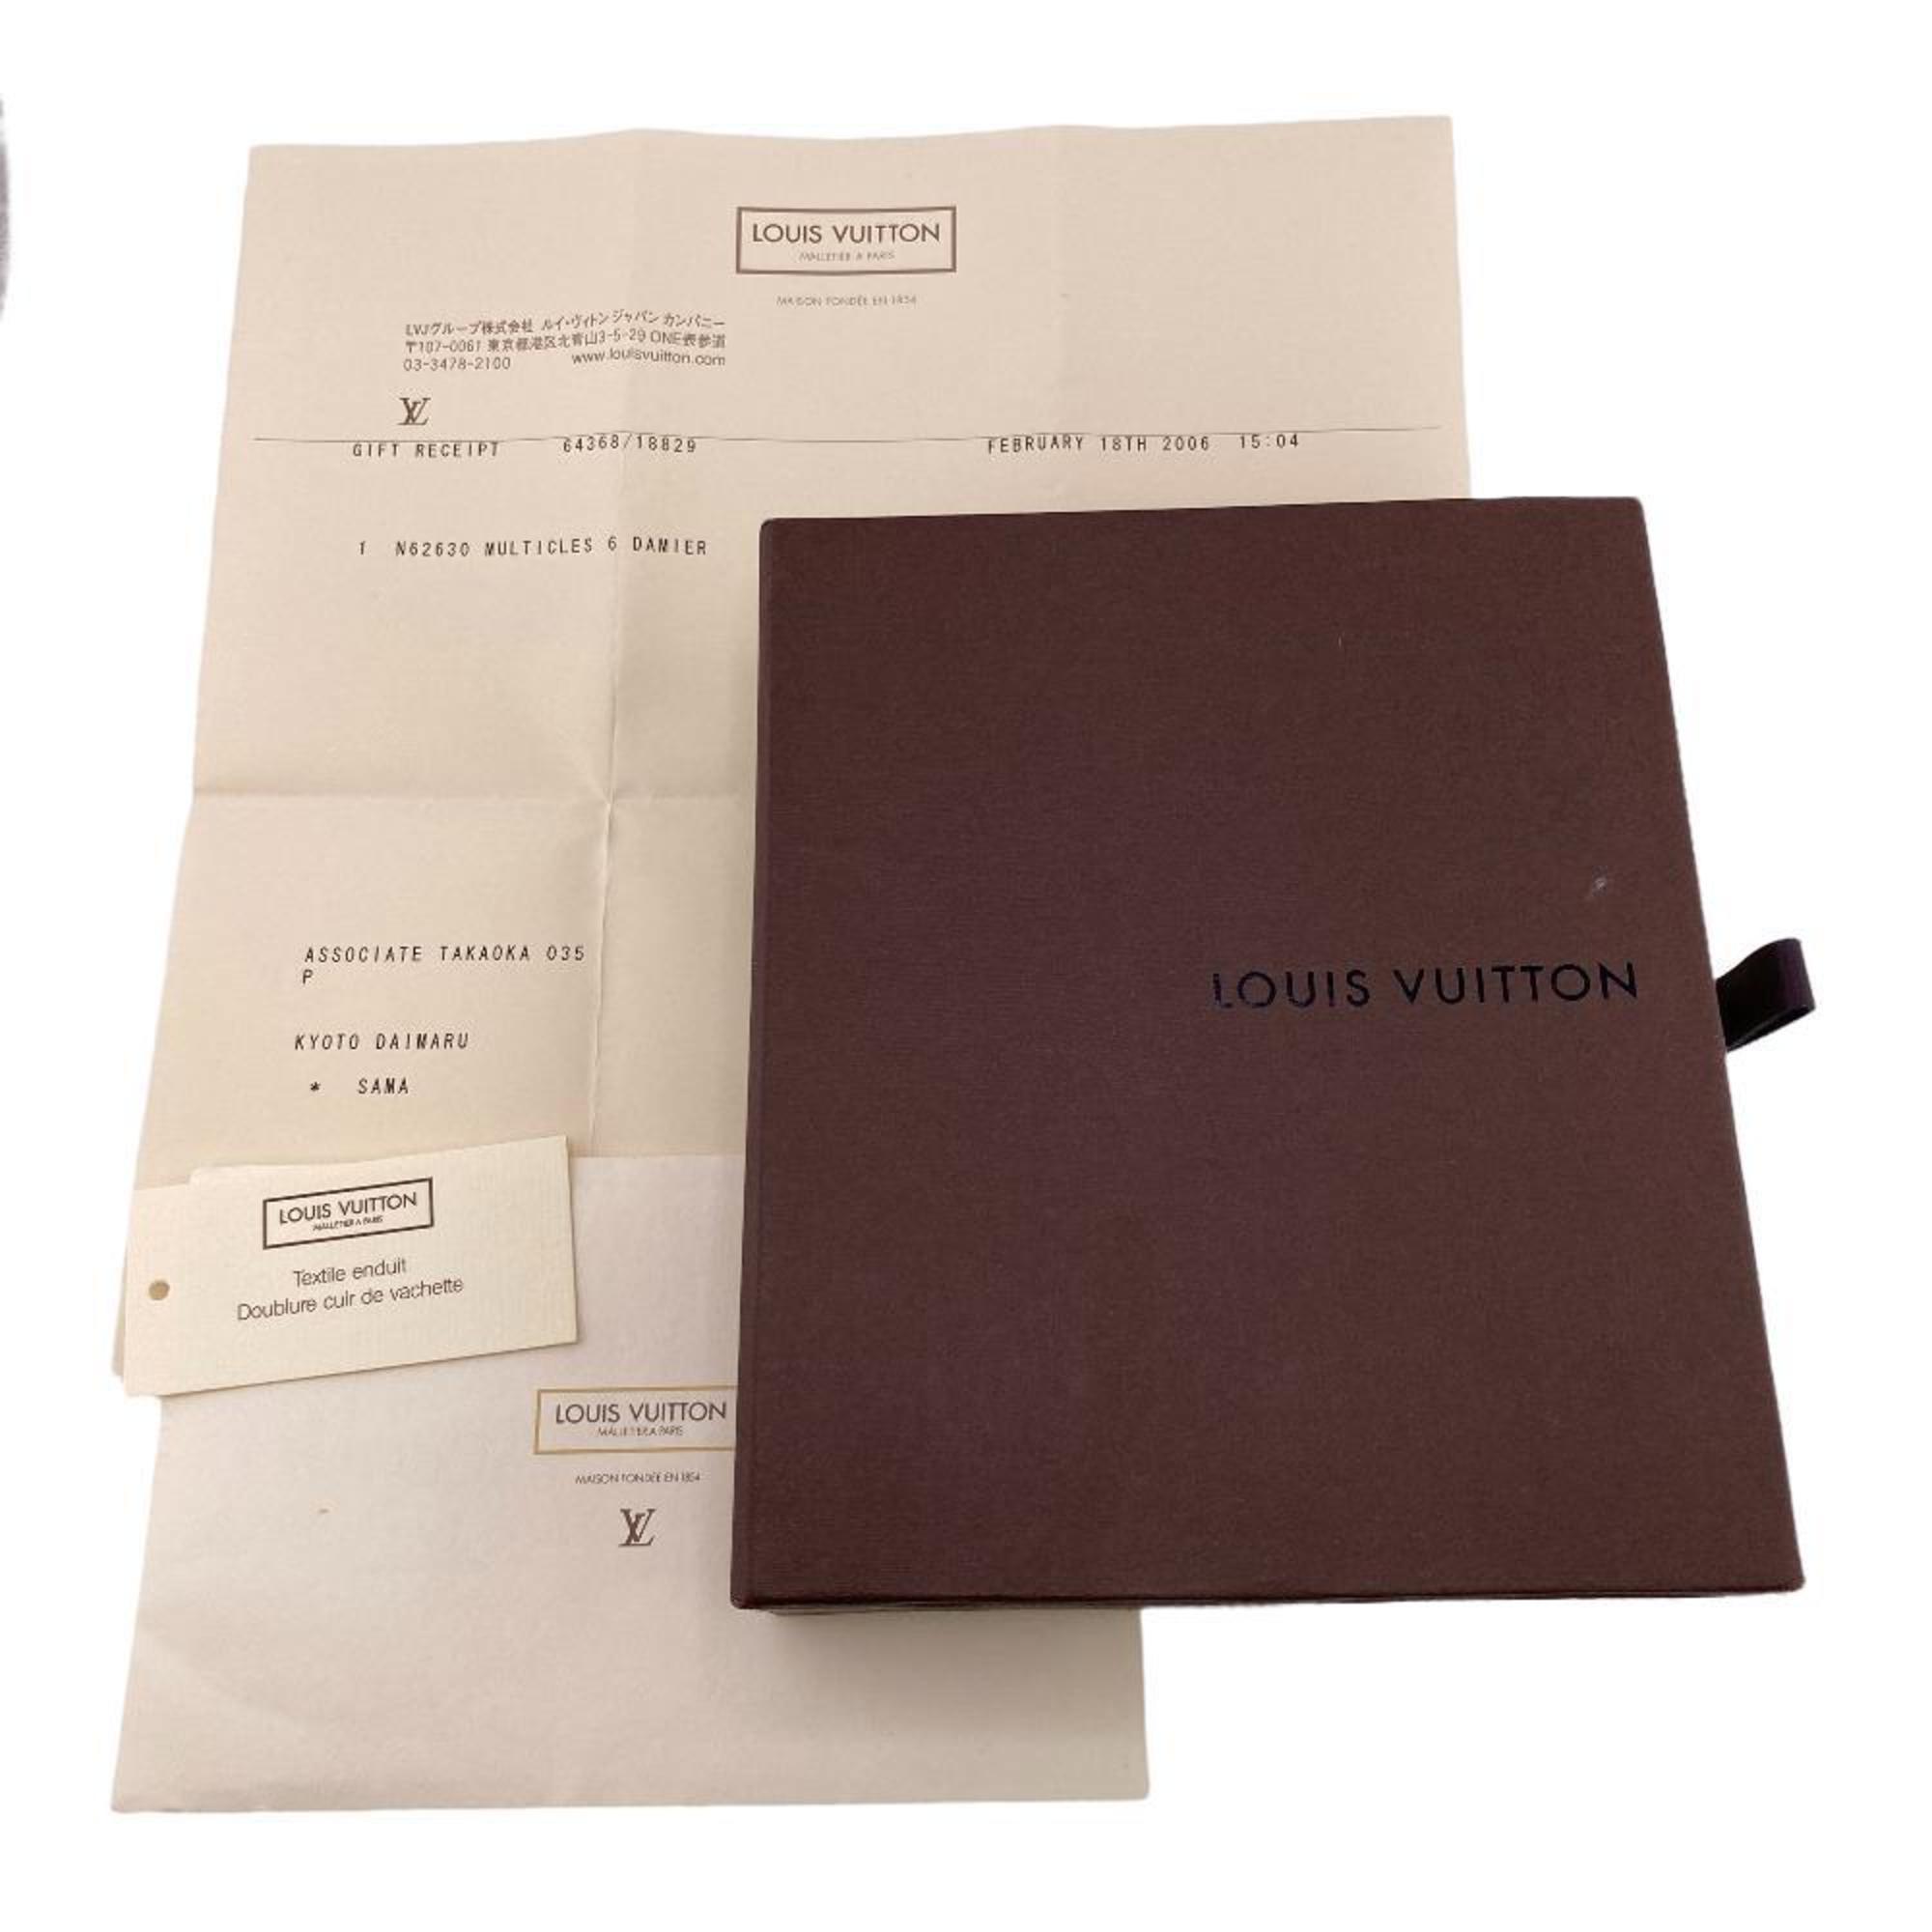 LOUIS VUITTON N62630 Multicle 6 Damier Key Case Brown Unisex Z0005914